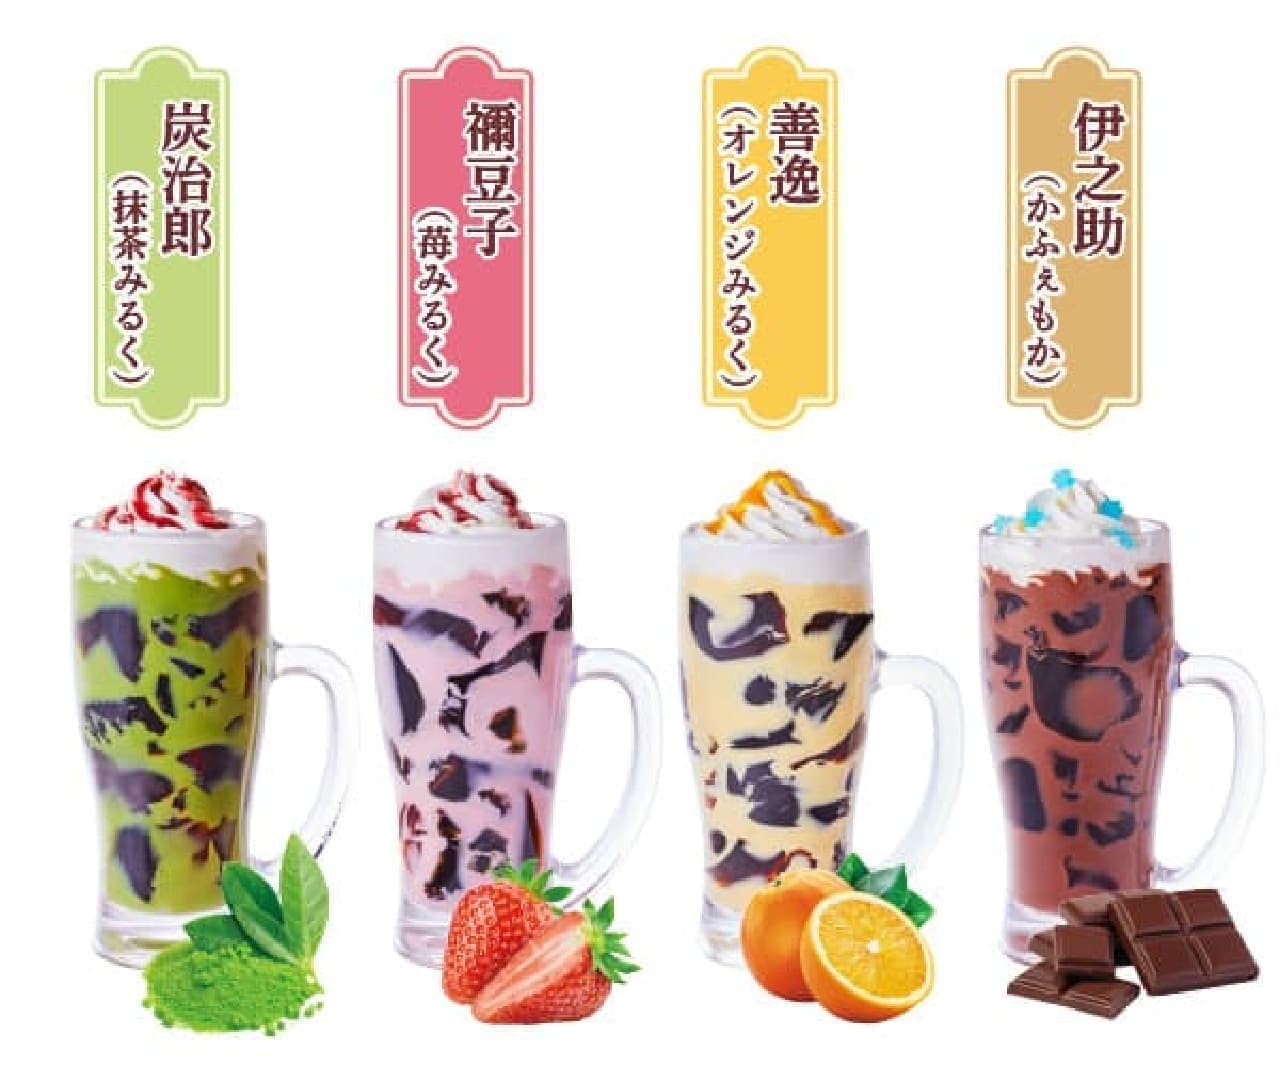 Komeda Coffee Shop "Relax with Komeda!" Campaign